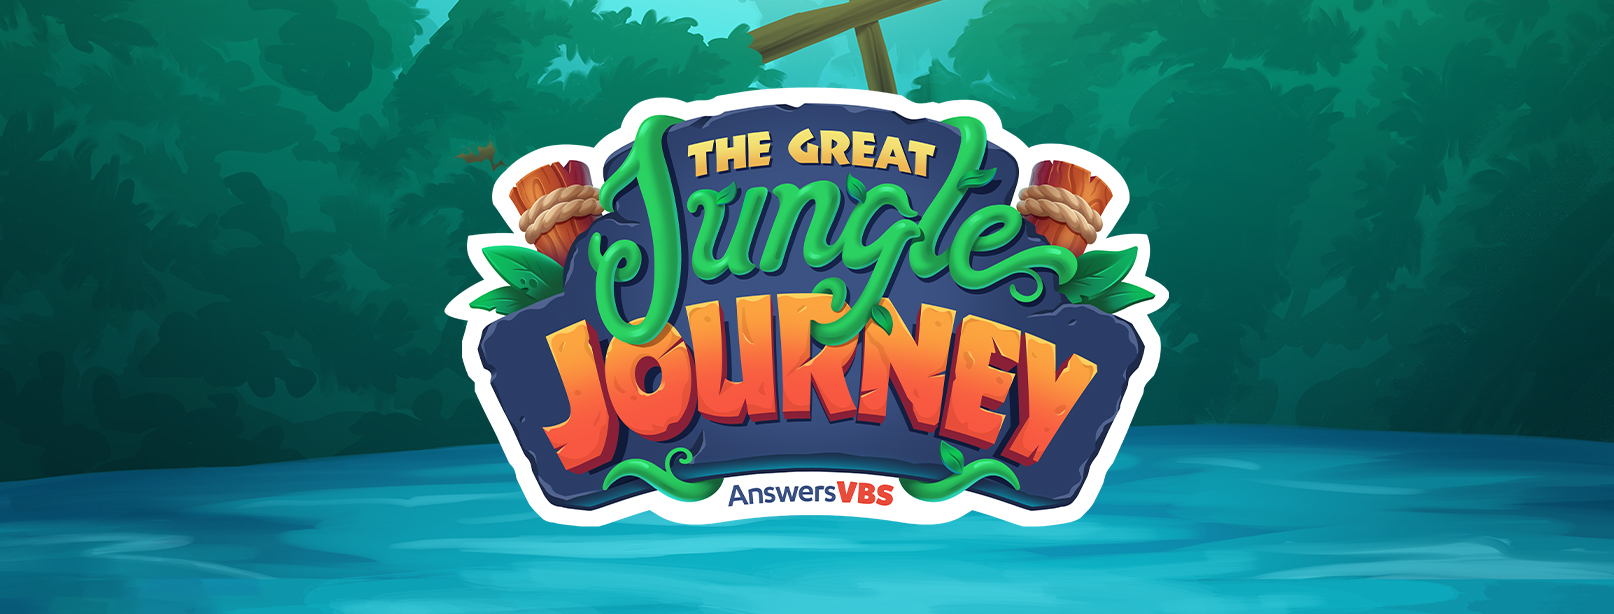 jungle-journey-SocialMedia-FacebookCover